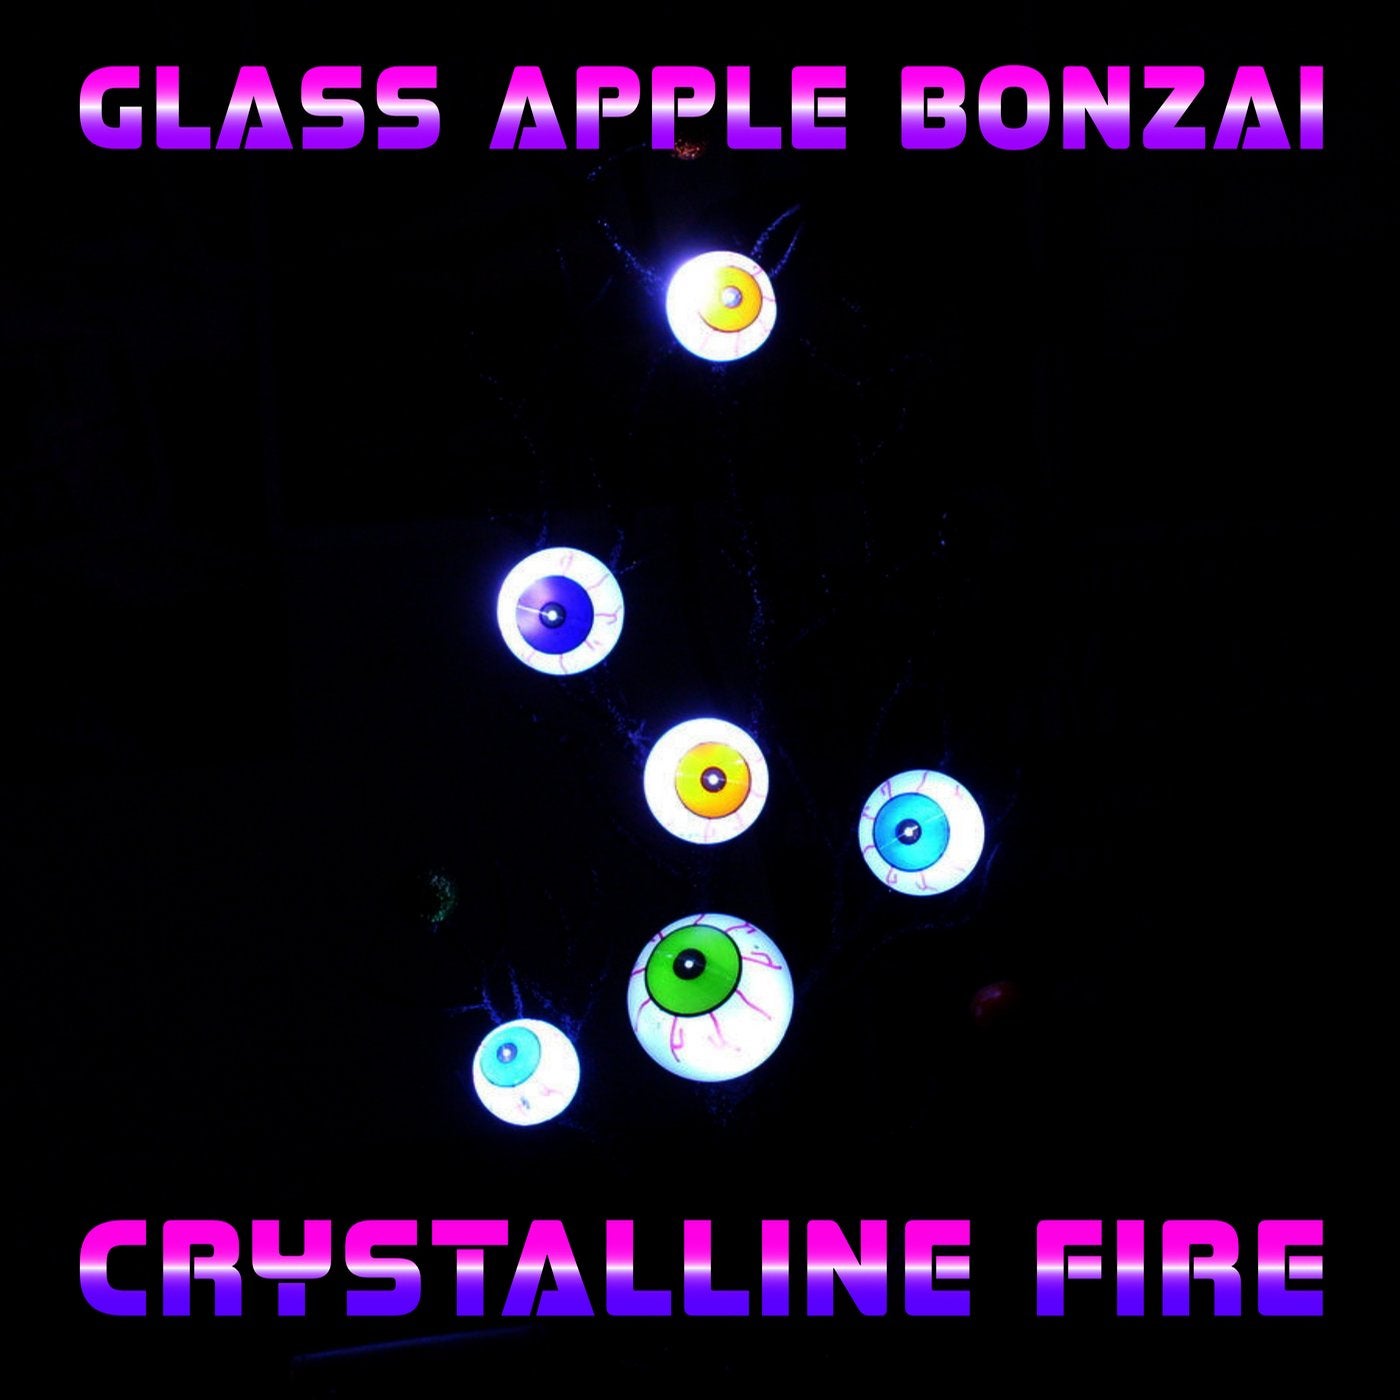 Crystalline Fire